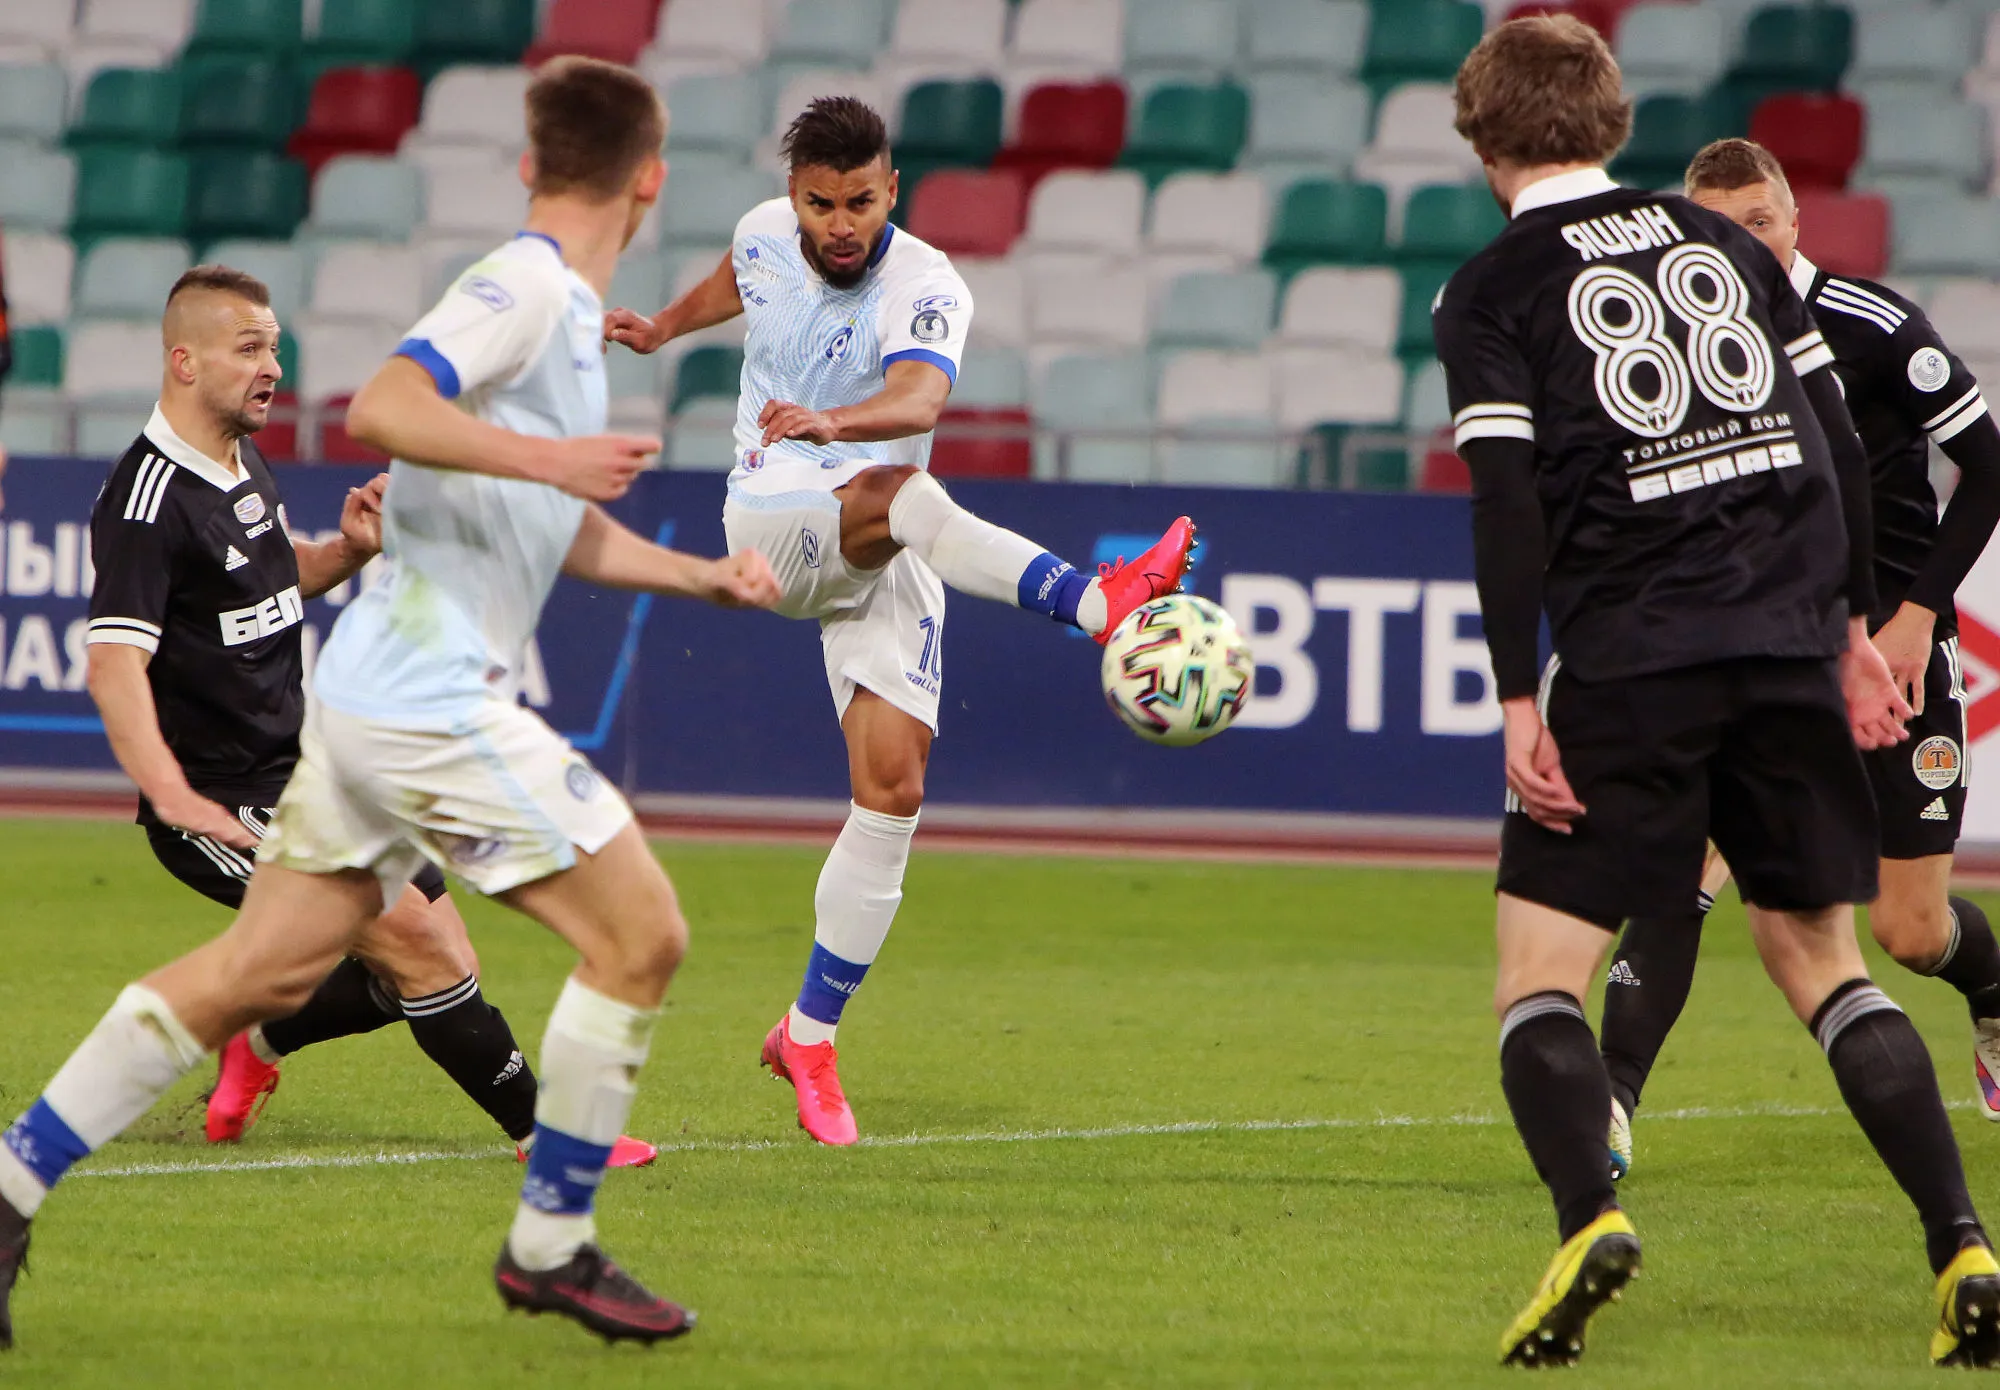 Pronostic Gorodeya Dinamo Minsk : Analyse, prono et cotes du match de Vysshaya Liga Belarus